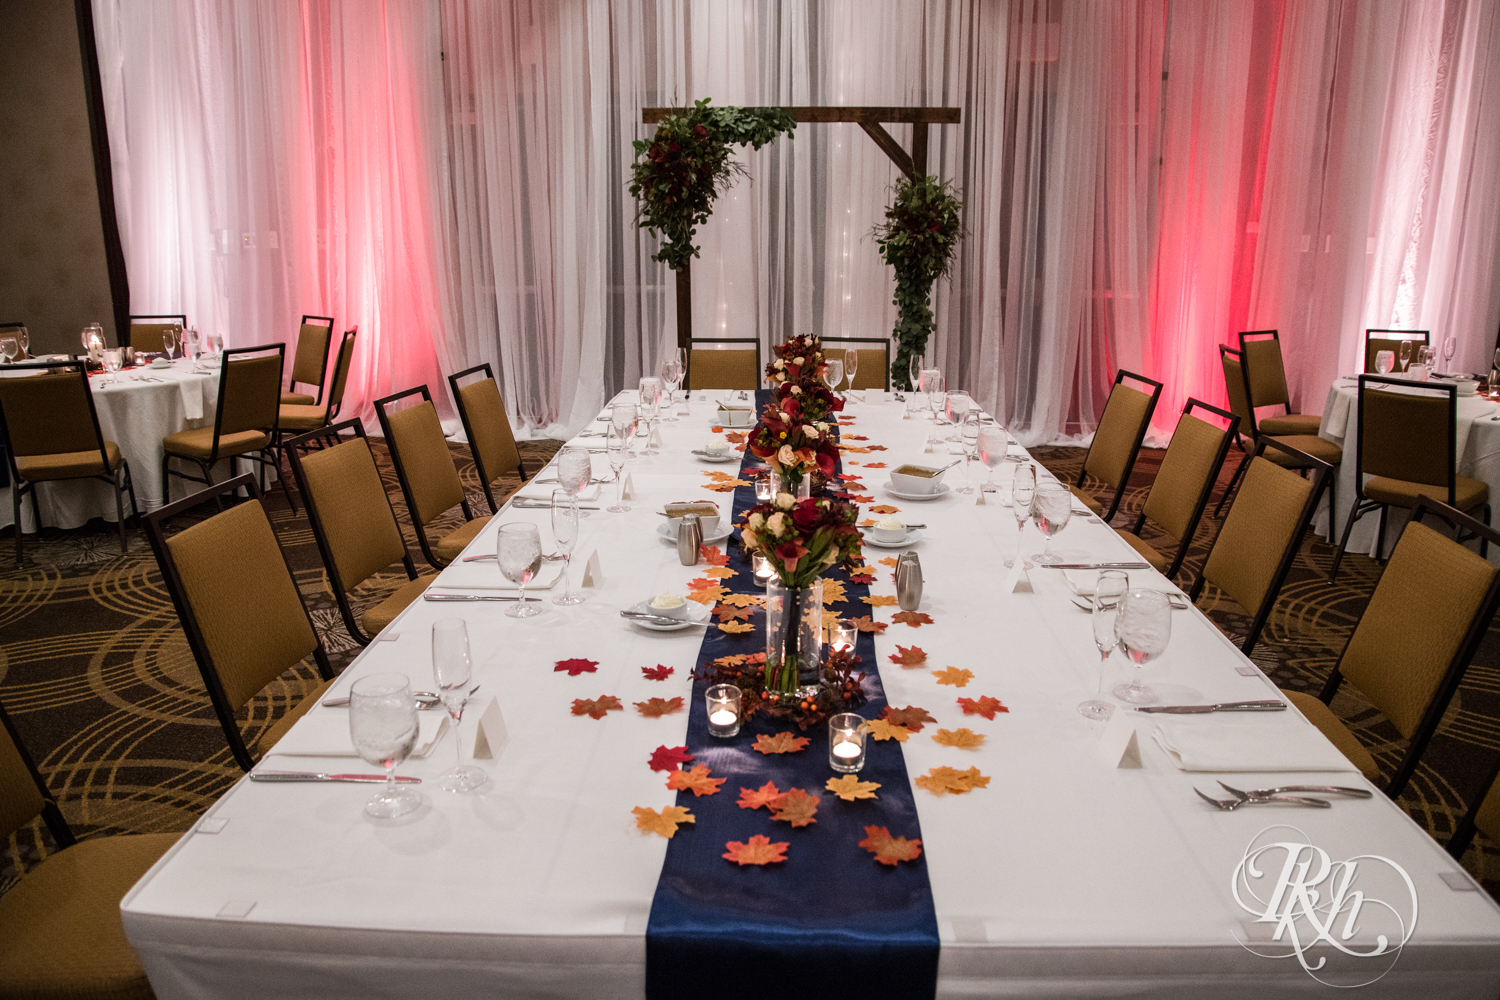 Indoor wedding reception setup at Courtyard by Marriott Minneapolis in Minneapolis, Minnesota.